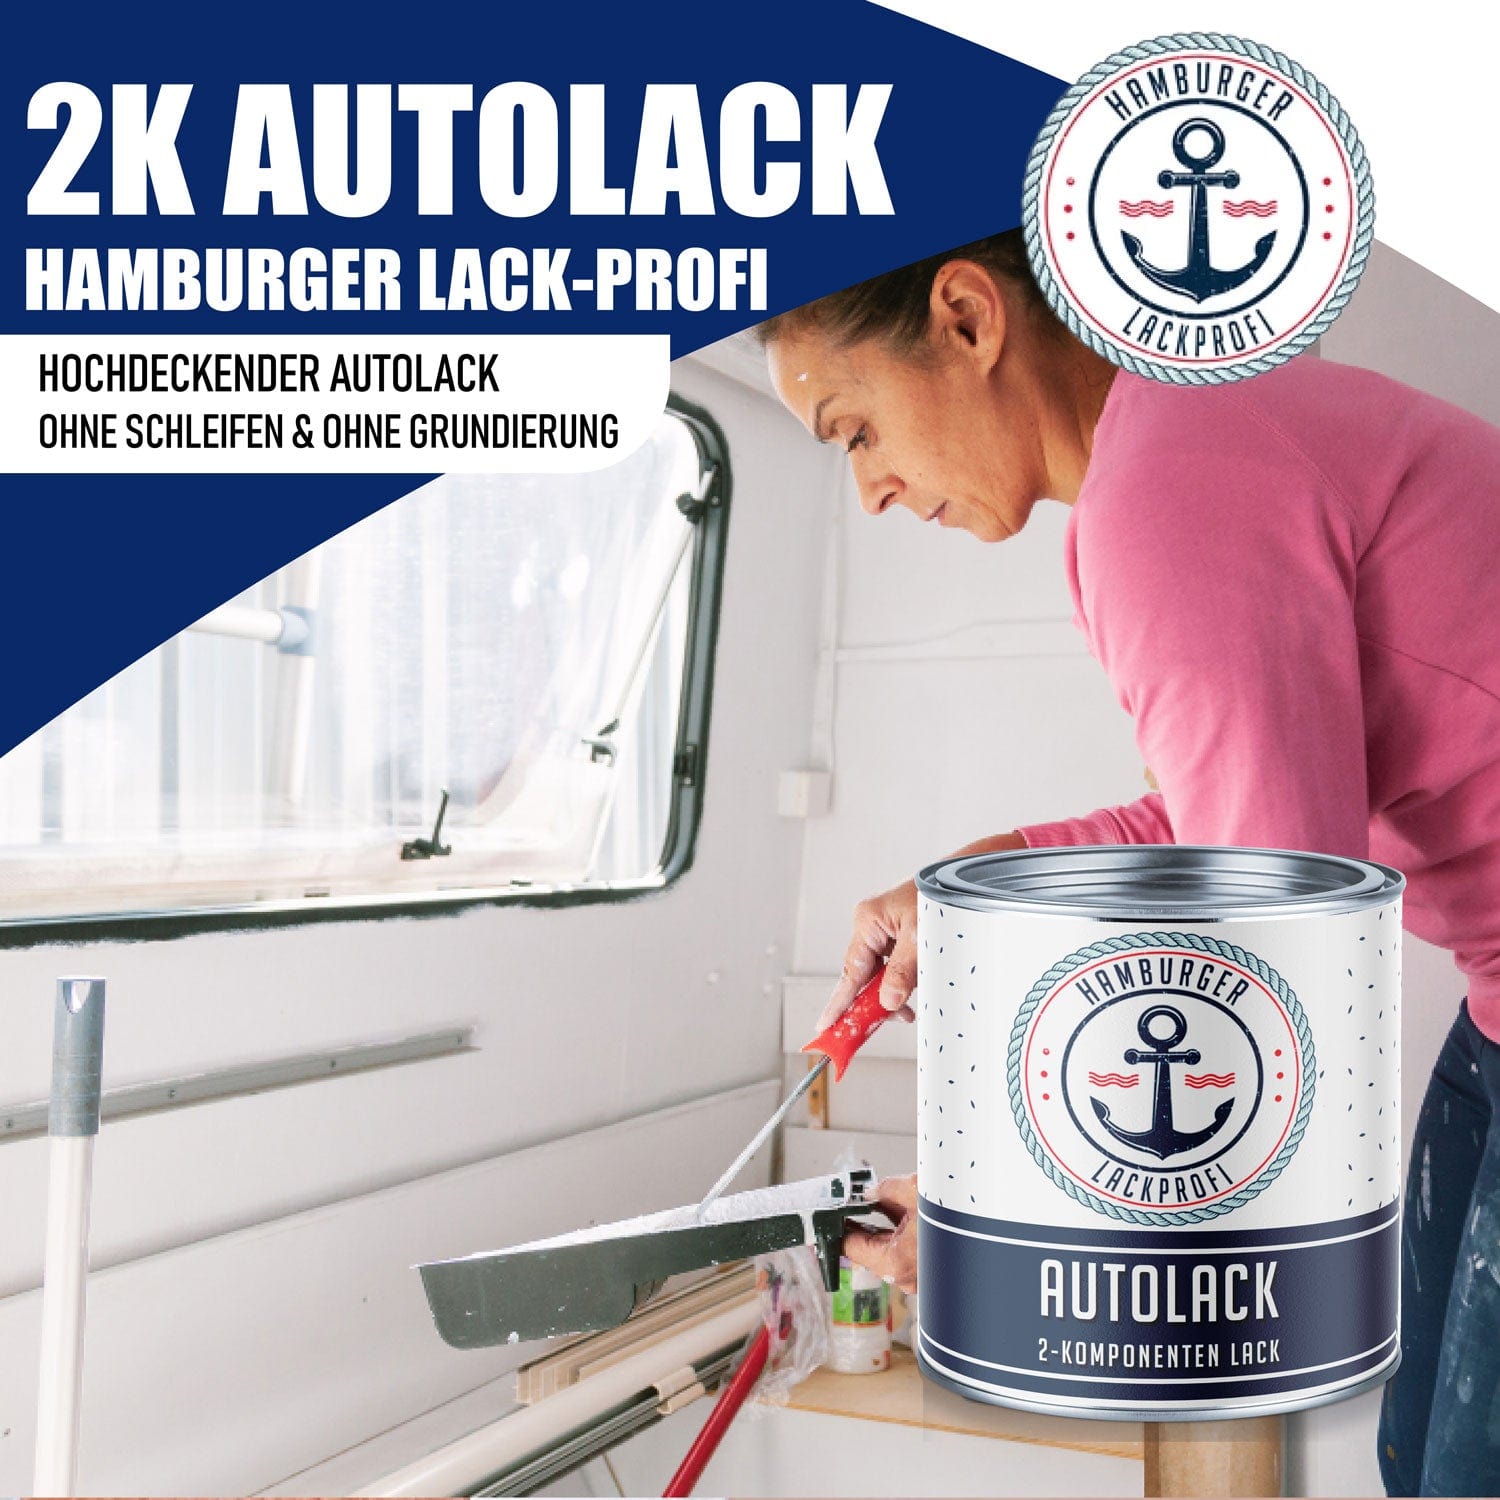 Hamburger Lack-Profi Lacke & Beschichtungen Hamburger Lack-Profi 2K Autolack in Chromoxidgrün RAL 6020 mit Lackierset (X300) & Verdünnung (1 L) - 30% Sparangebot